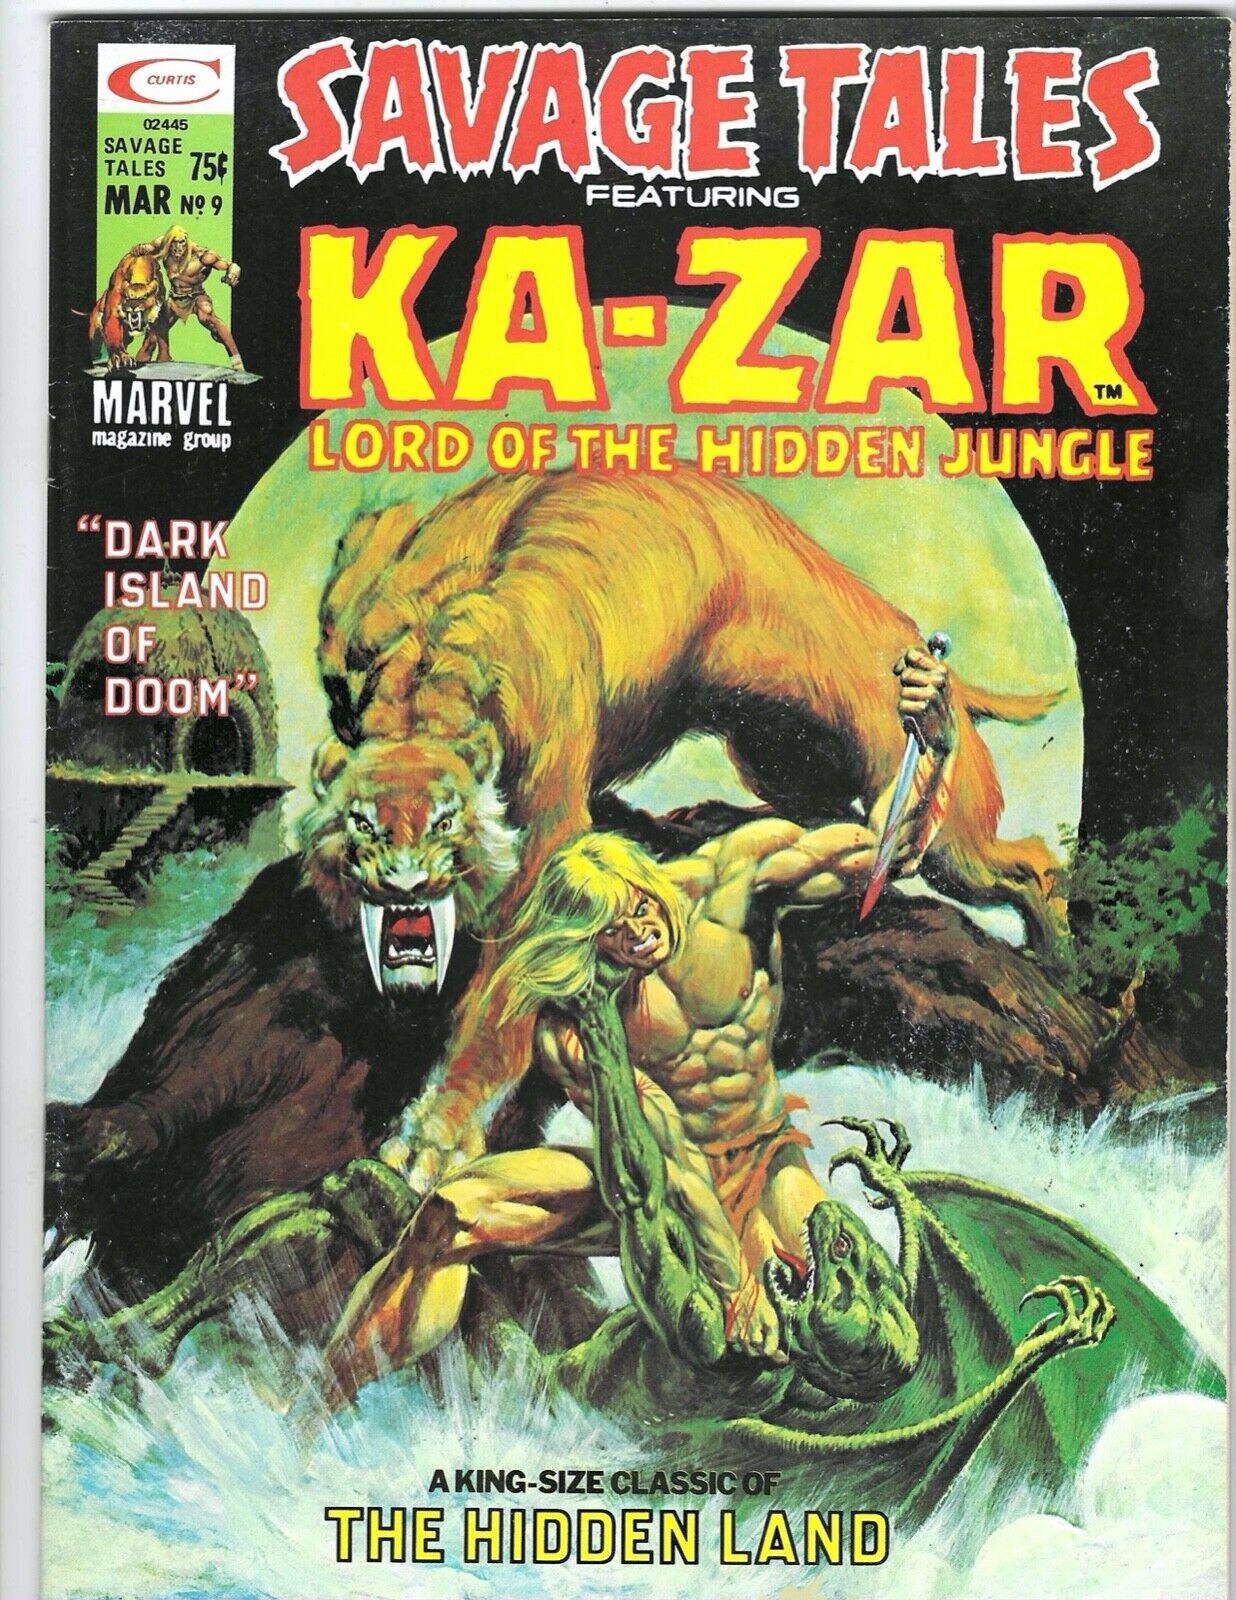 Savage Tales #9 1975 NM-  Ka-Zar Lord of the Jungle NM- Michael Kaluta Cover Art